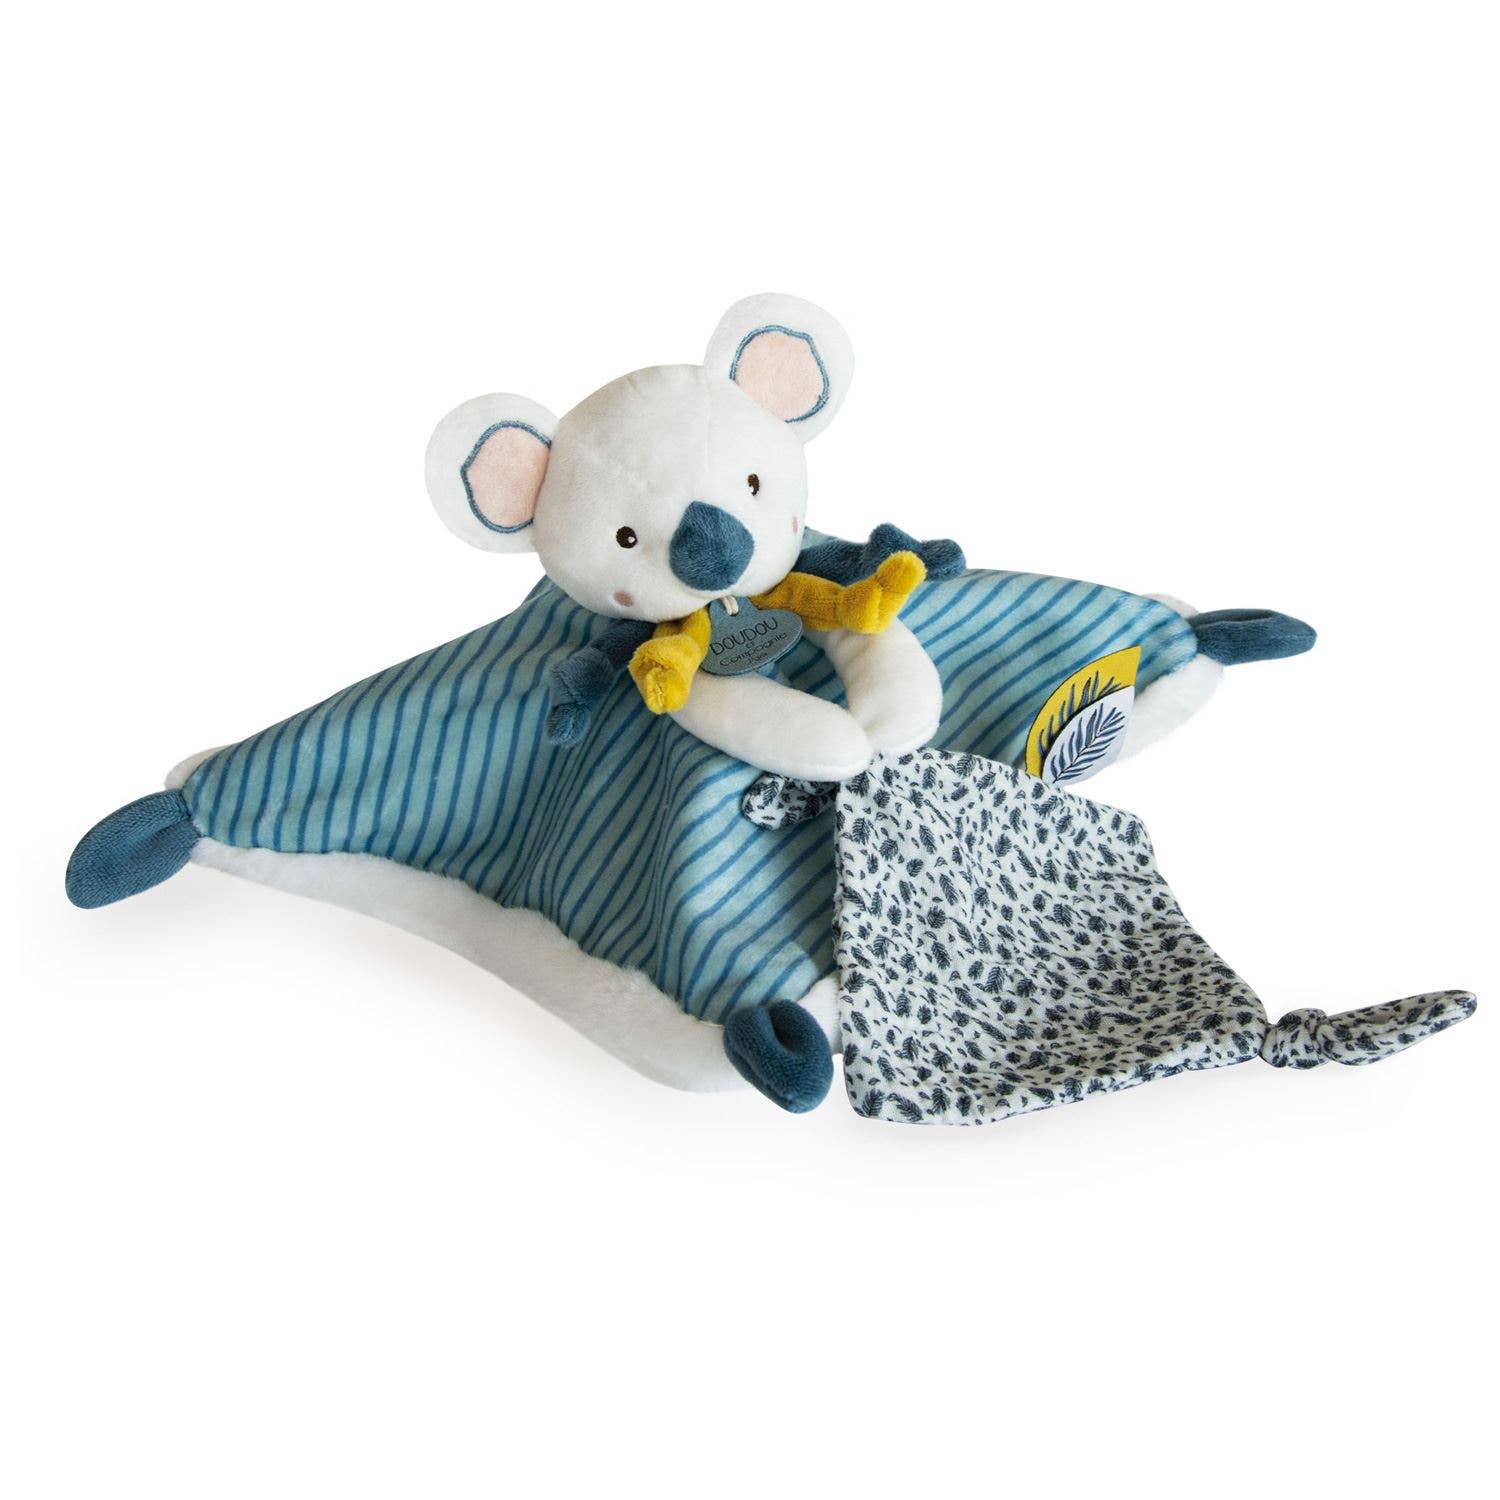 Yoka the Koala Doudou Toy with Blue Stripes and Forest Pattern